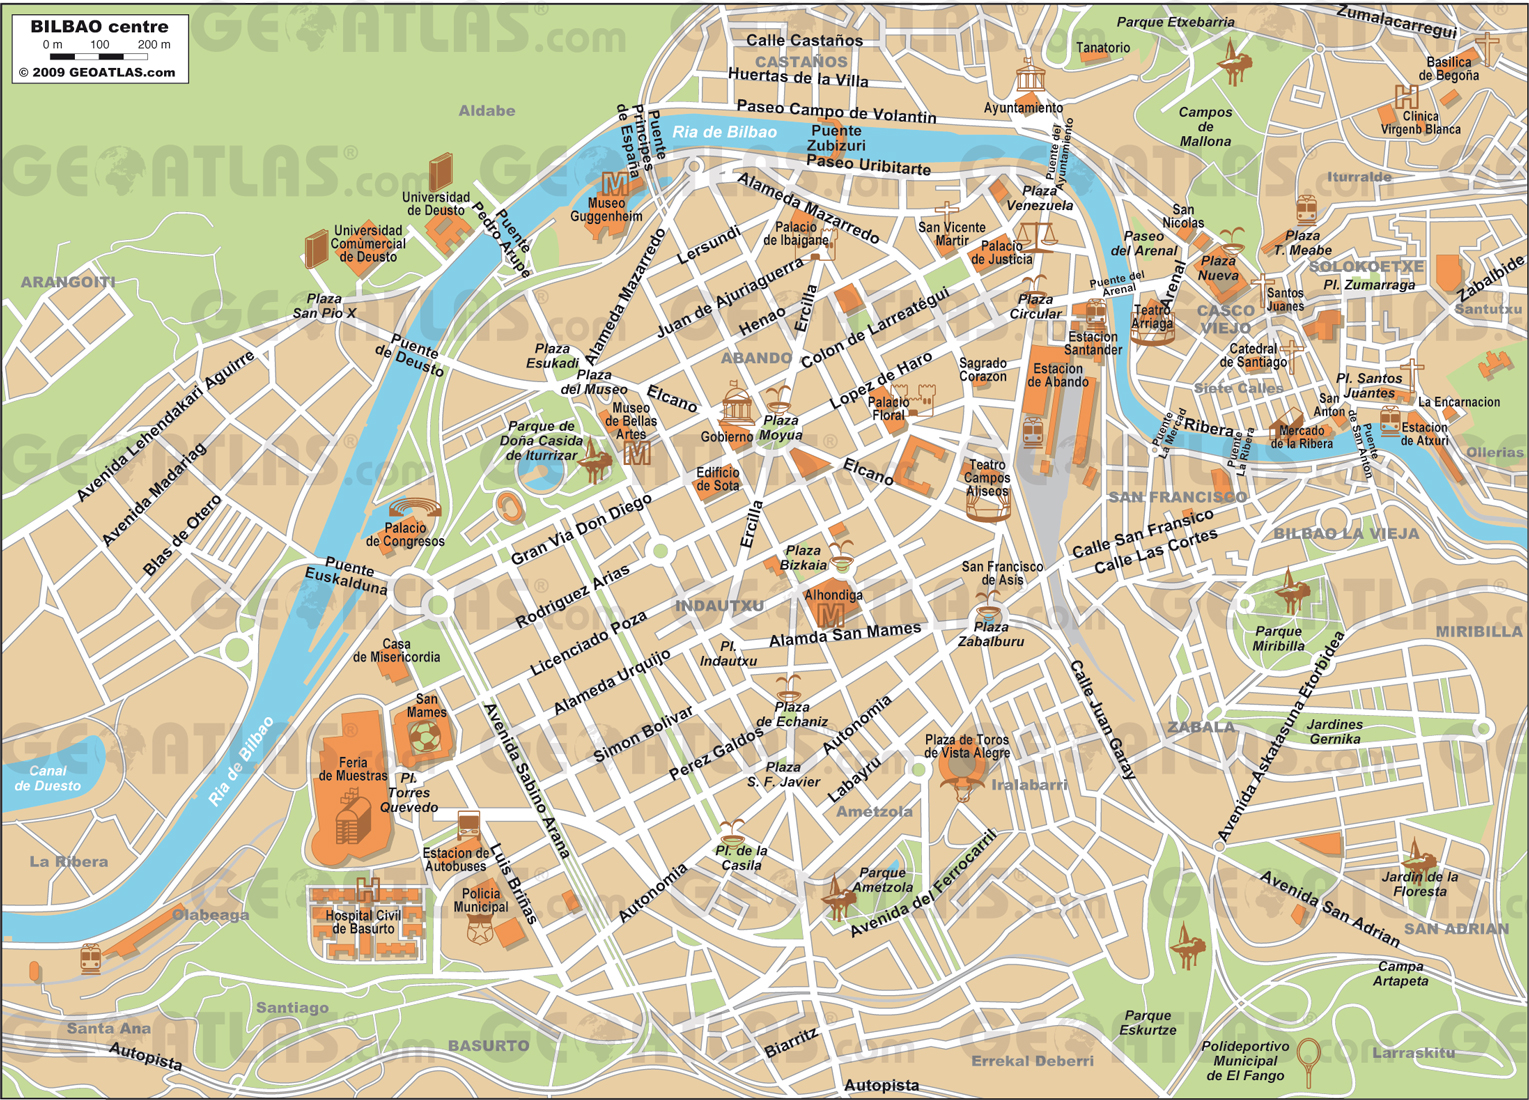 CITY MAP